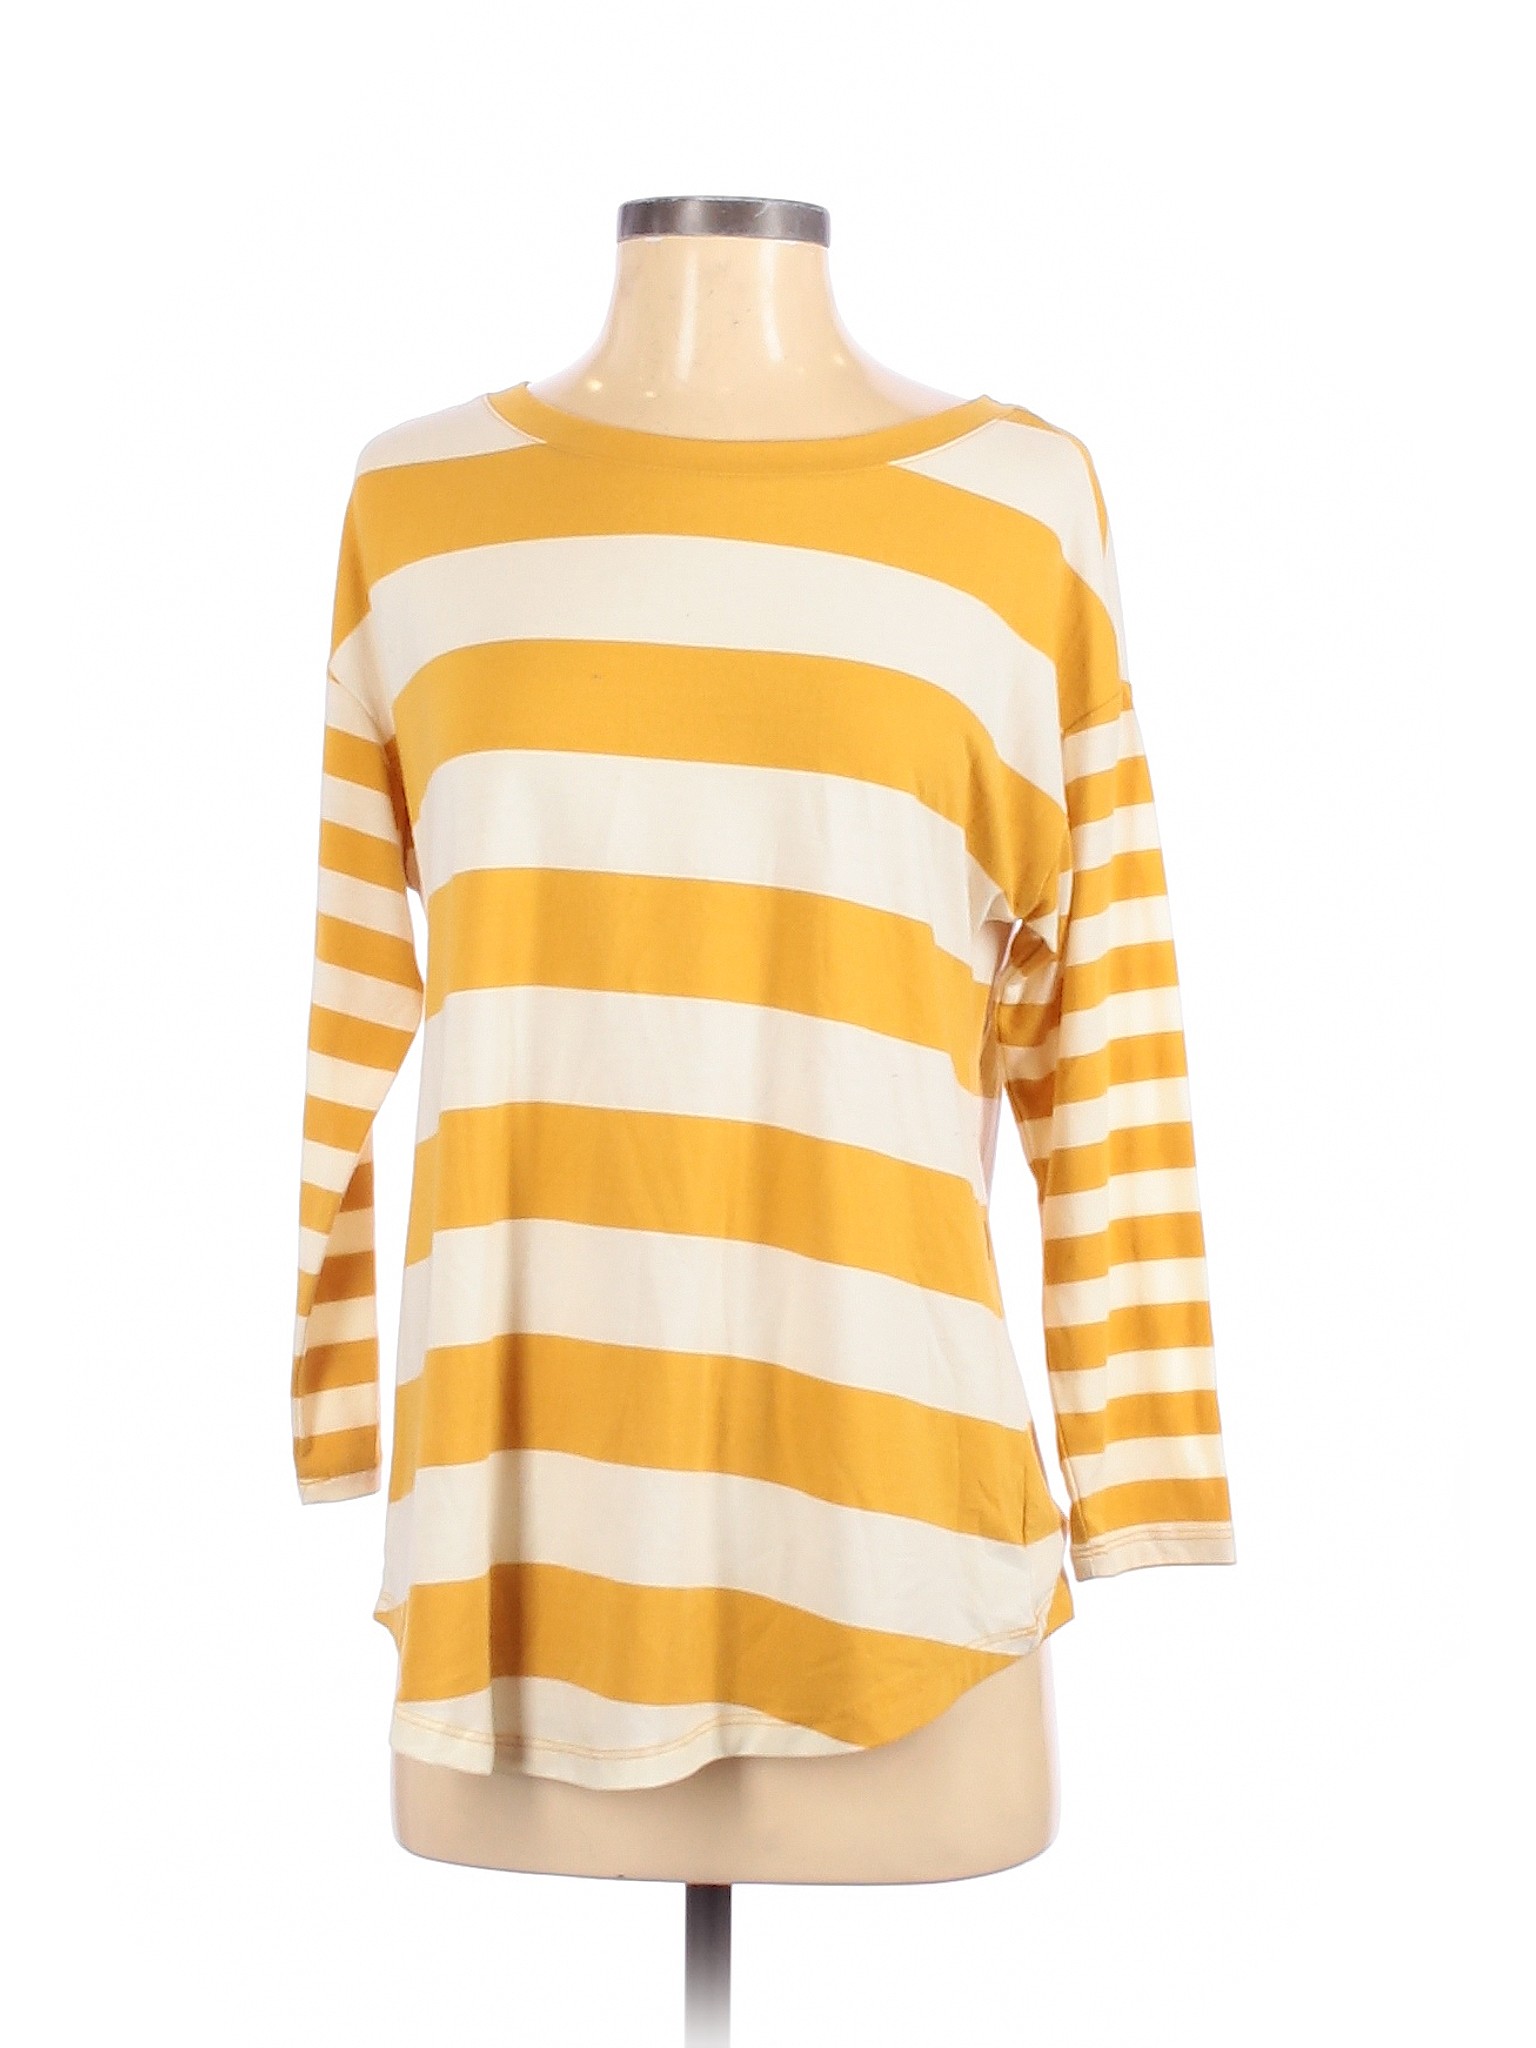 Maurices Women Yellow 3/4 Sleeve T-Shirt S | eBay